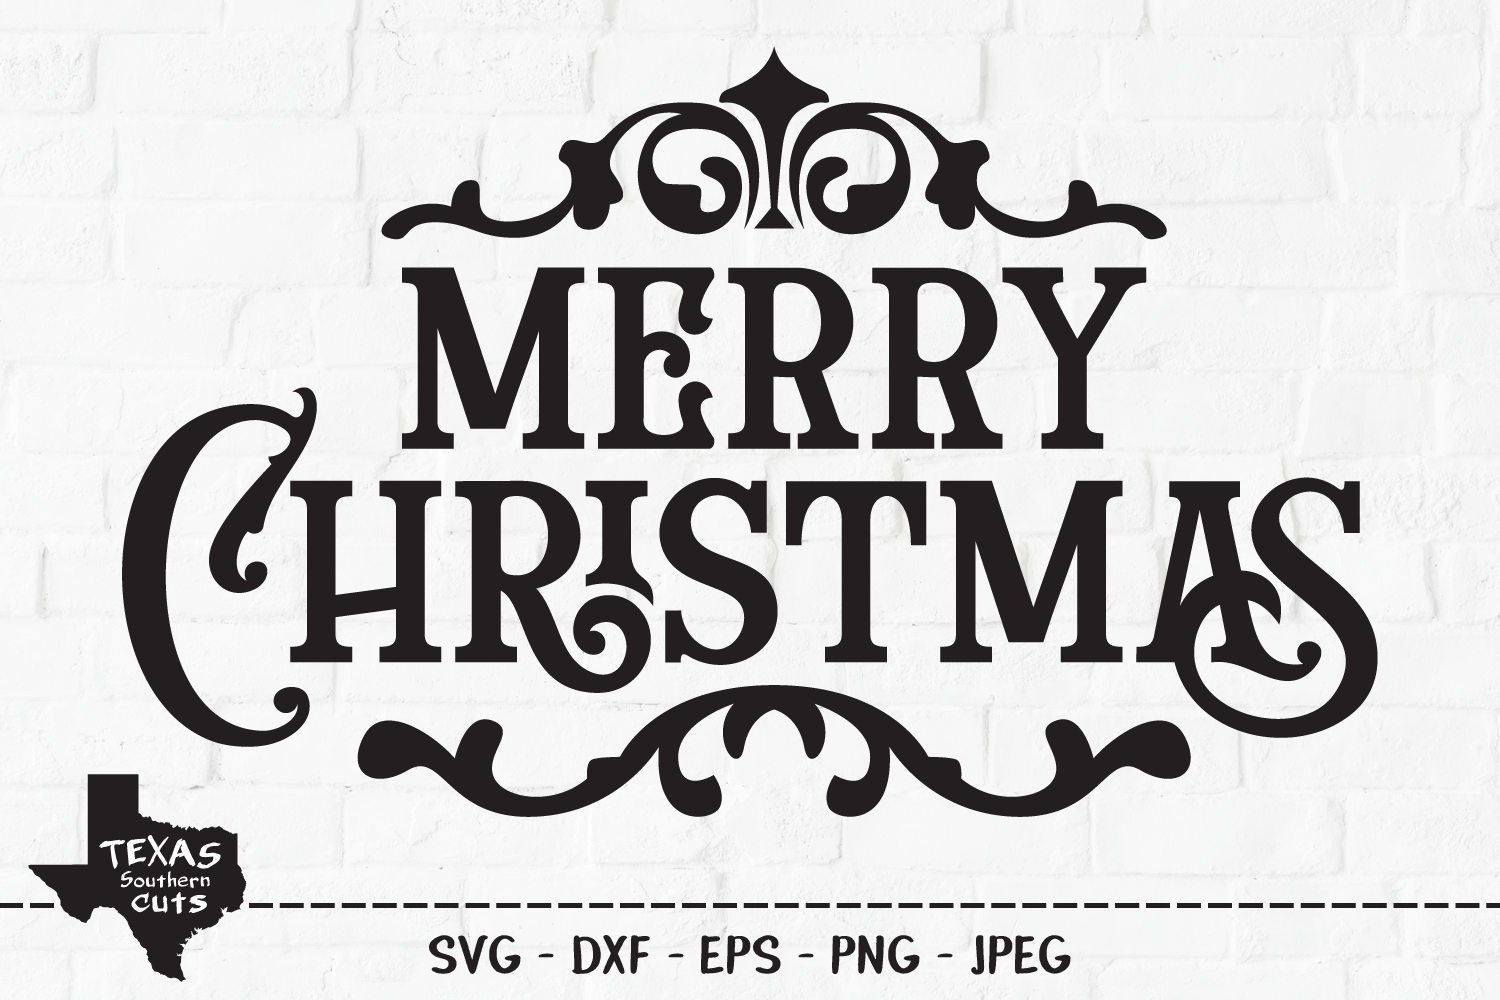 Merry Christmas SVG, Cut File, Christmas Shirt Design